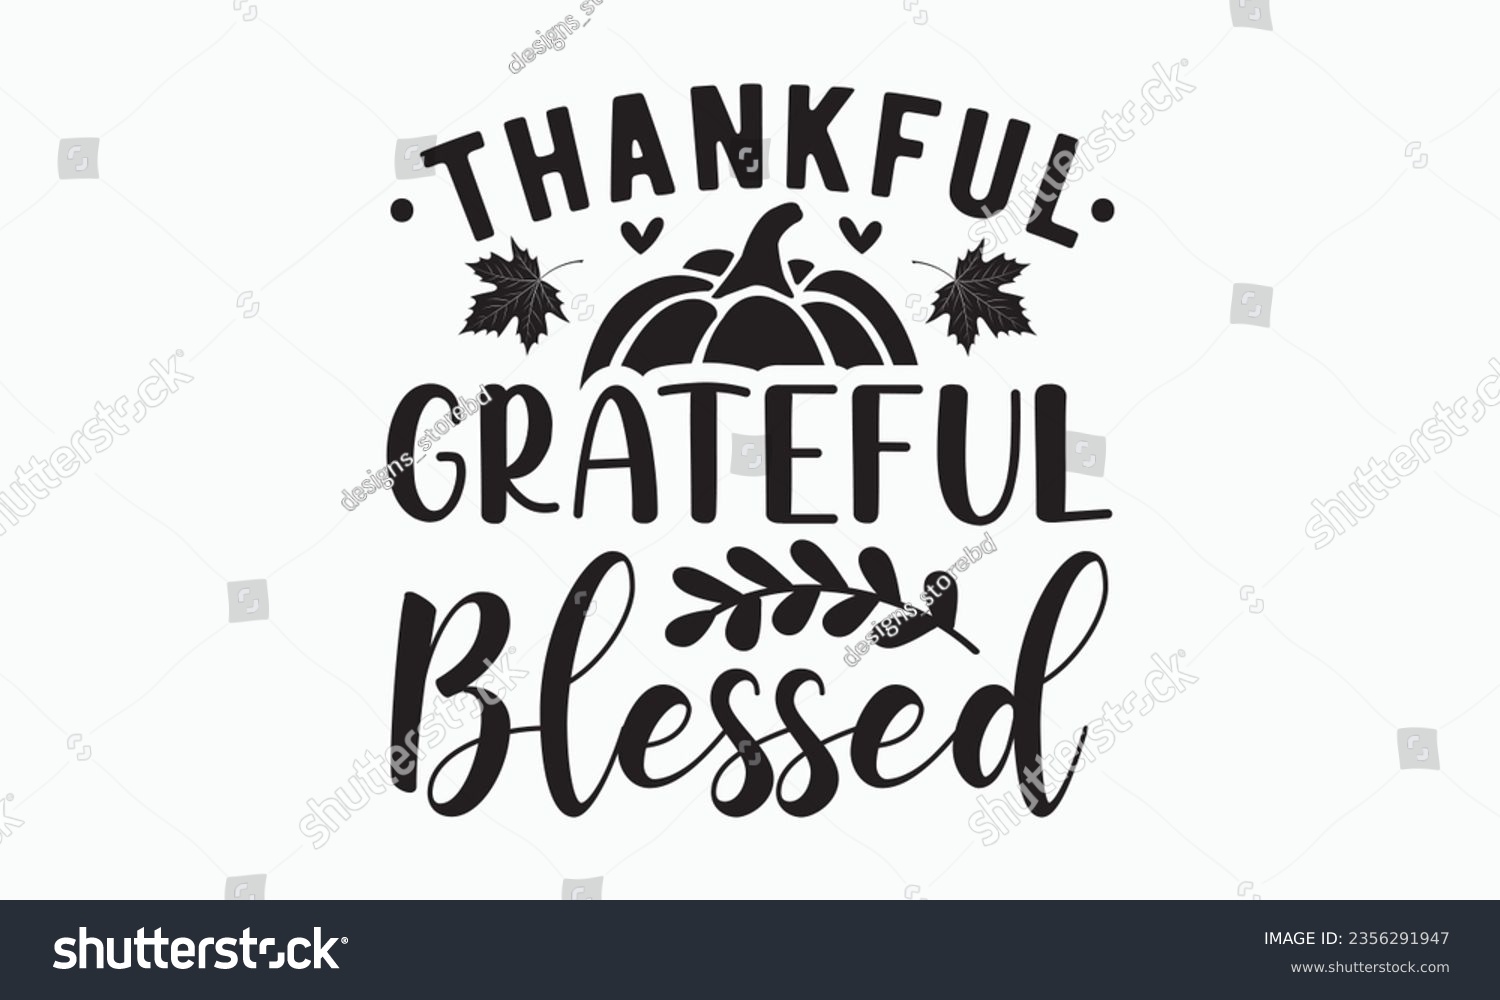 SVG of Thankful grateful blessed svg, Thanksgiving t-shirt design, Funny Fall svg,  EPS, autumn bundle, Pumpkin, Handmade calligraphy vector illustration graphic, Hand written vector sign, Cut File Cricut svg